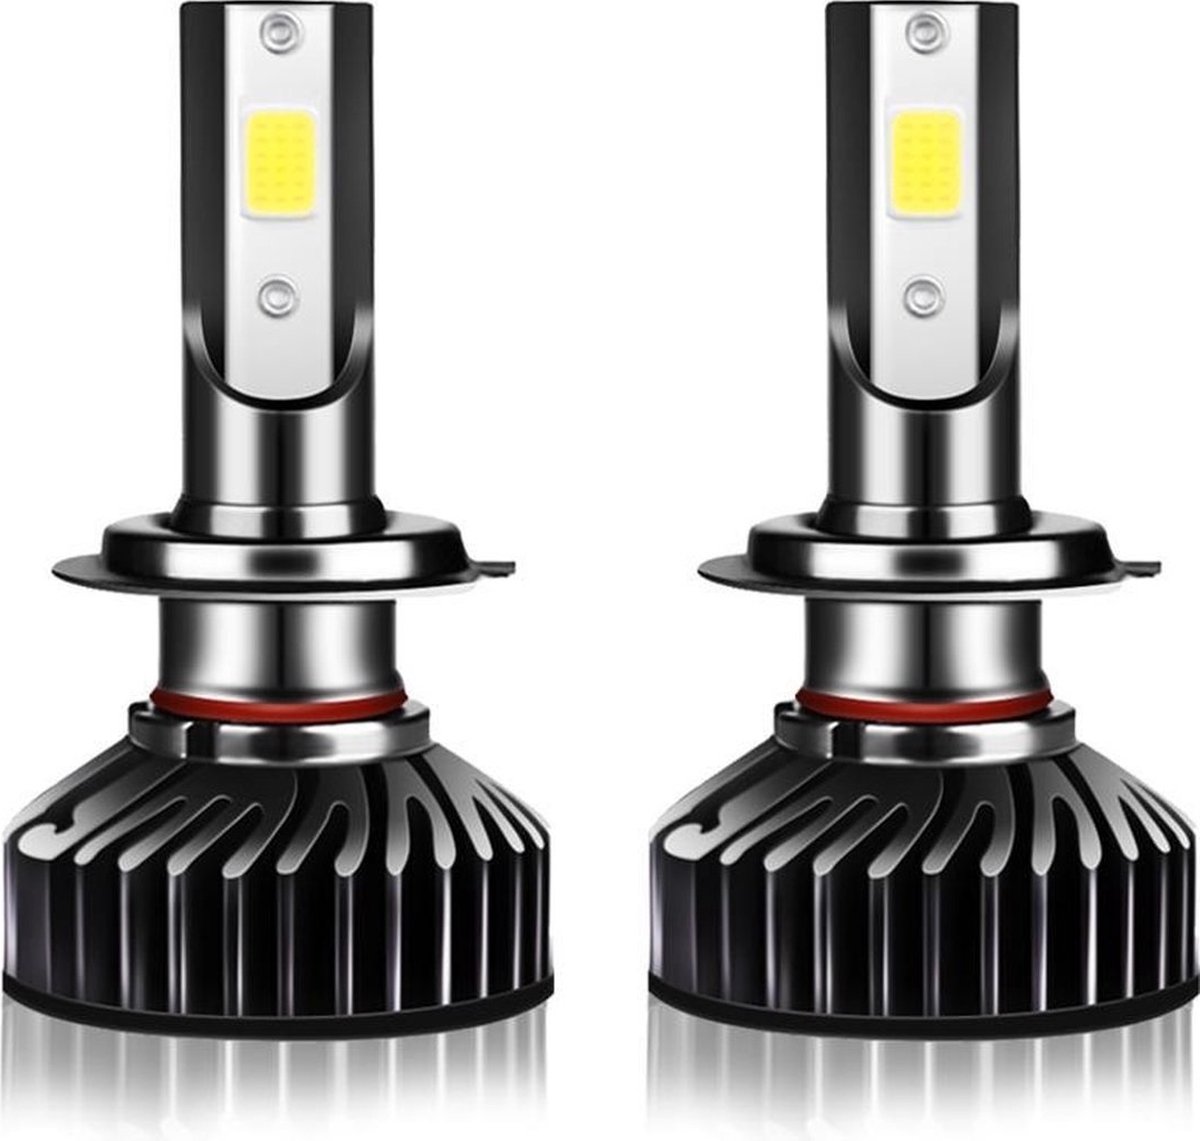 TLVX H7 Felle Auto LED lampen 2 stuks – Canbus – Goede pasvorm – Koplampen – 6000K wit licht – Autoverlichting – 12V – Dimlicht – Grootlicht – 7000Lumen (2 stuks)